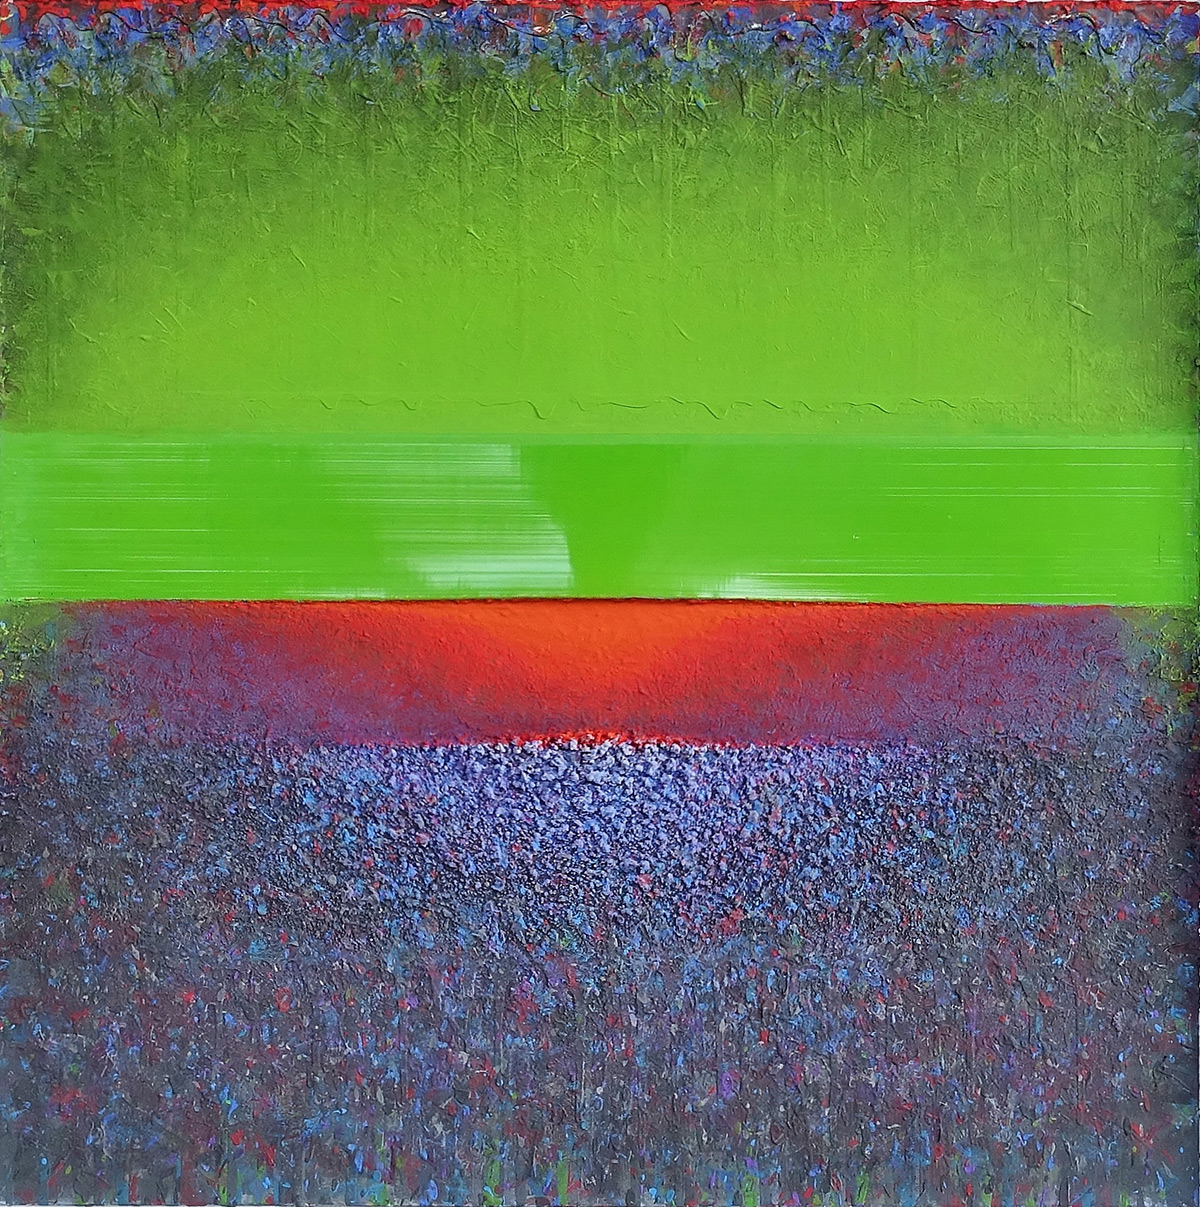 Sebastian Skoczylas - The green bay (Mixed media on canvas | Size: 90 x 90 cm | Price: 10000 PLN)